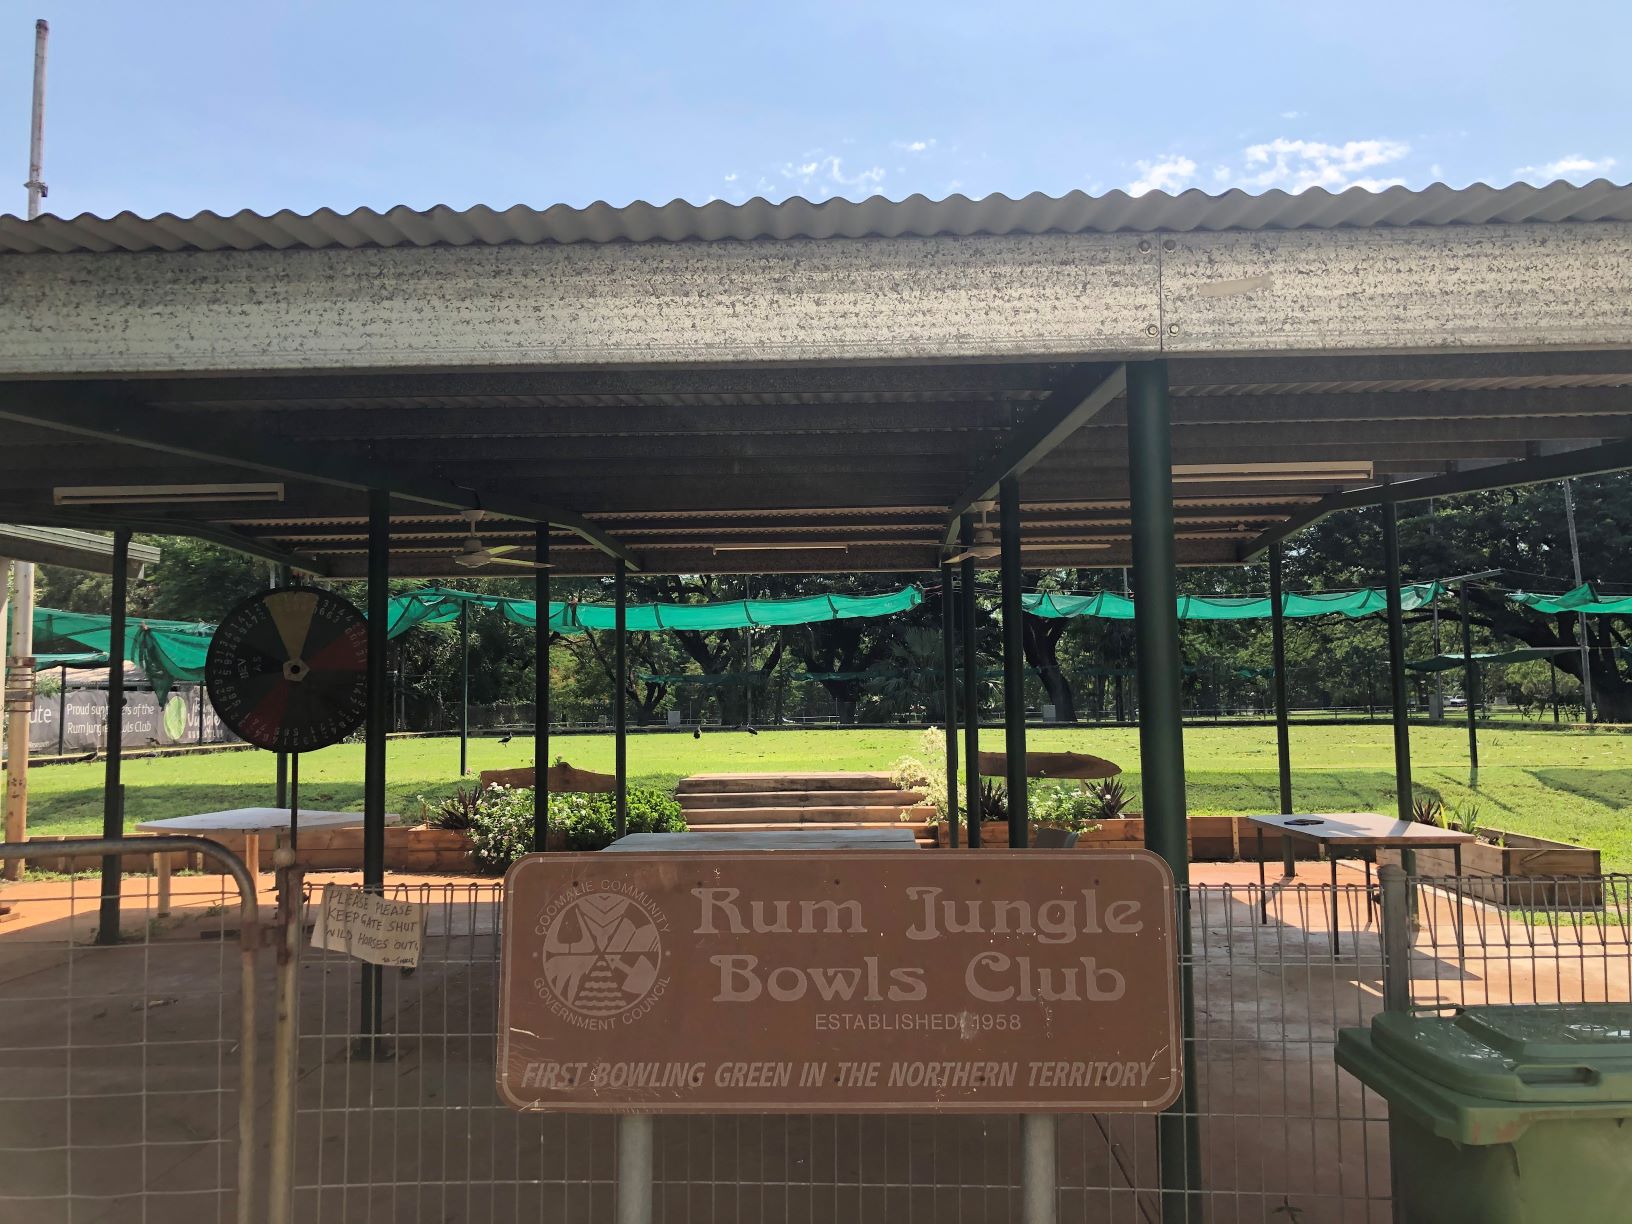 https://visitlitchfieldnt.com.au/wp-content/uploads/2019/12/Rum-Jungle-Bowls-Club-Sue-Mornane.jpg